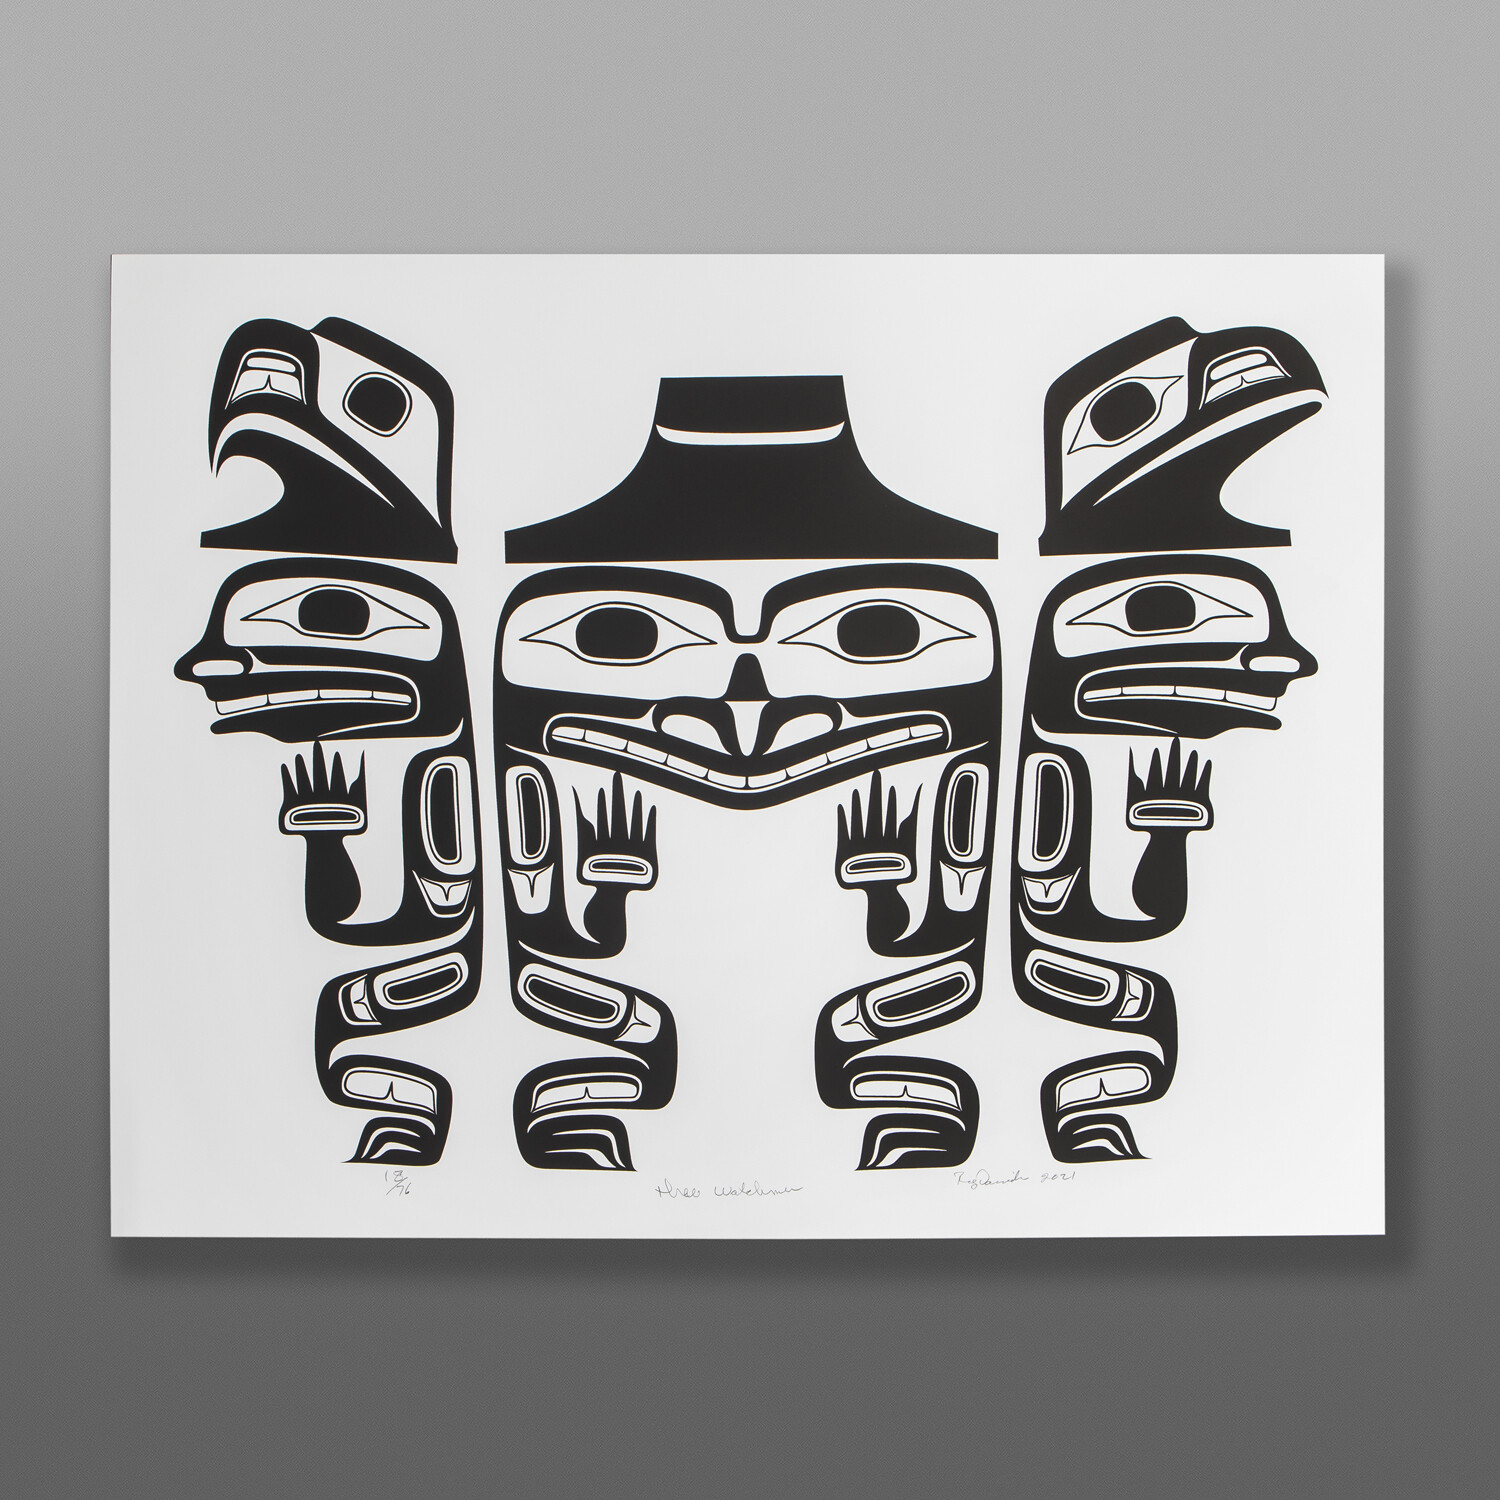 Three Watchmen
Reg Davidson
Haida
Serigraph
28" x 22"
$325